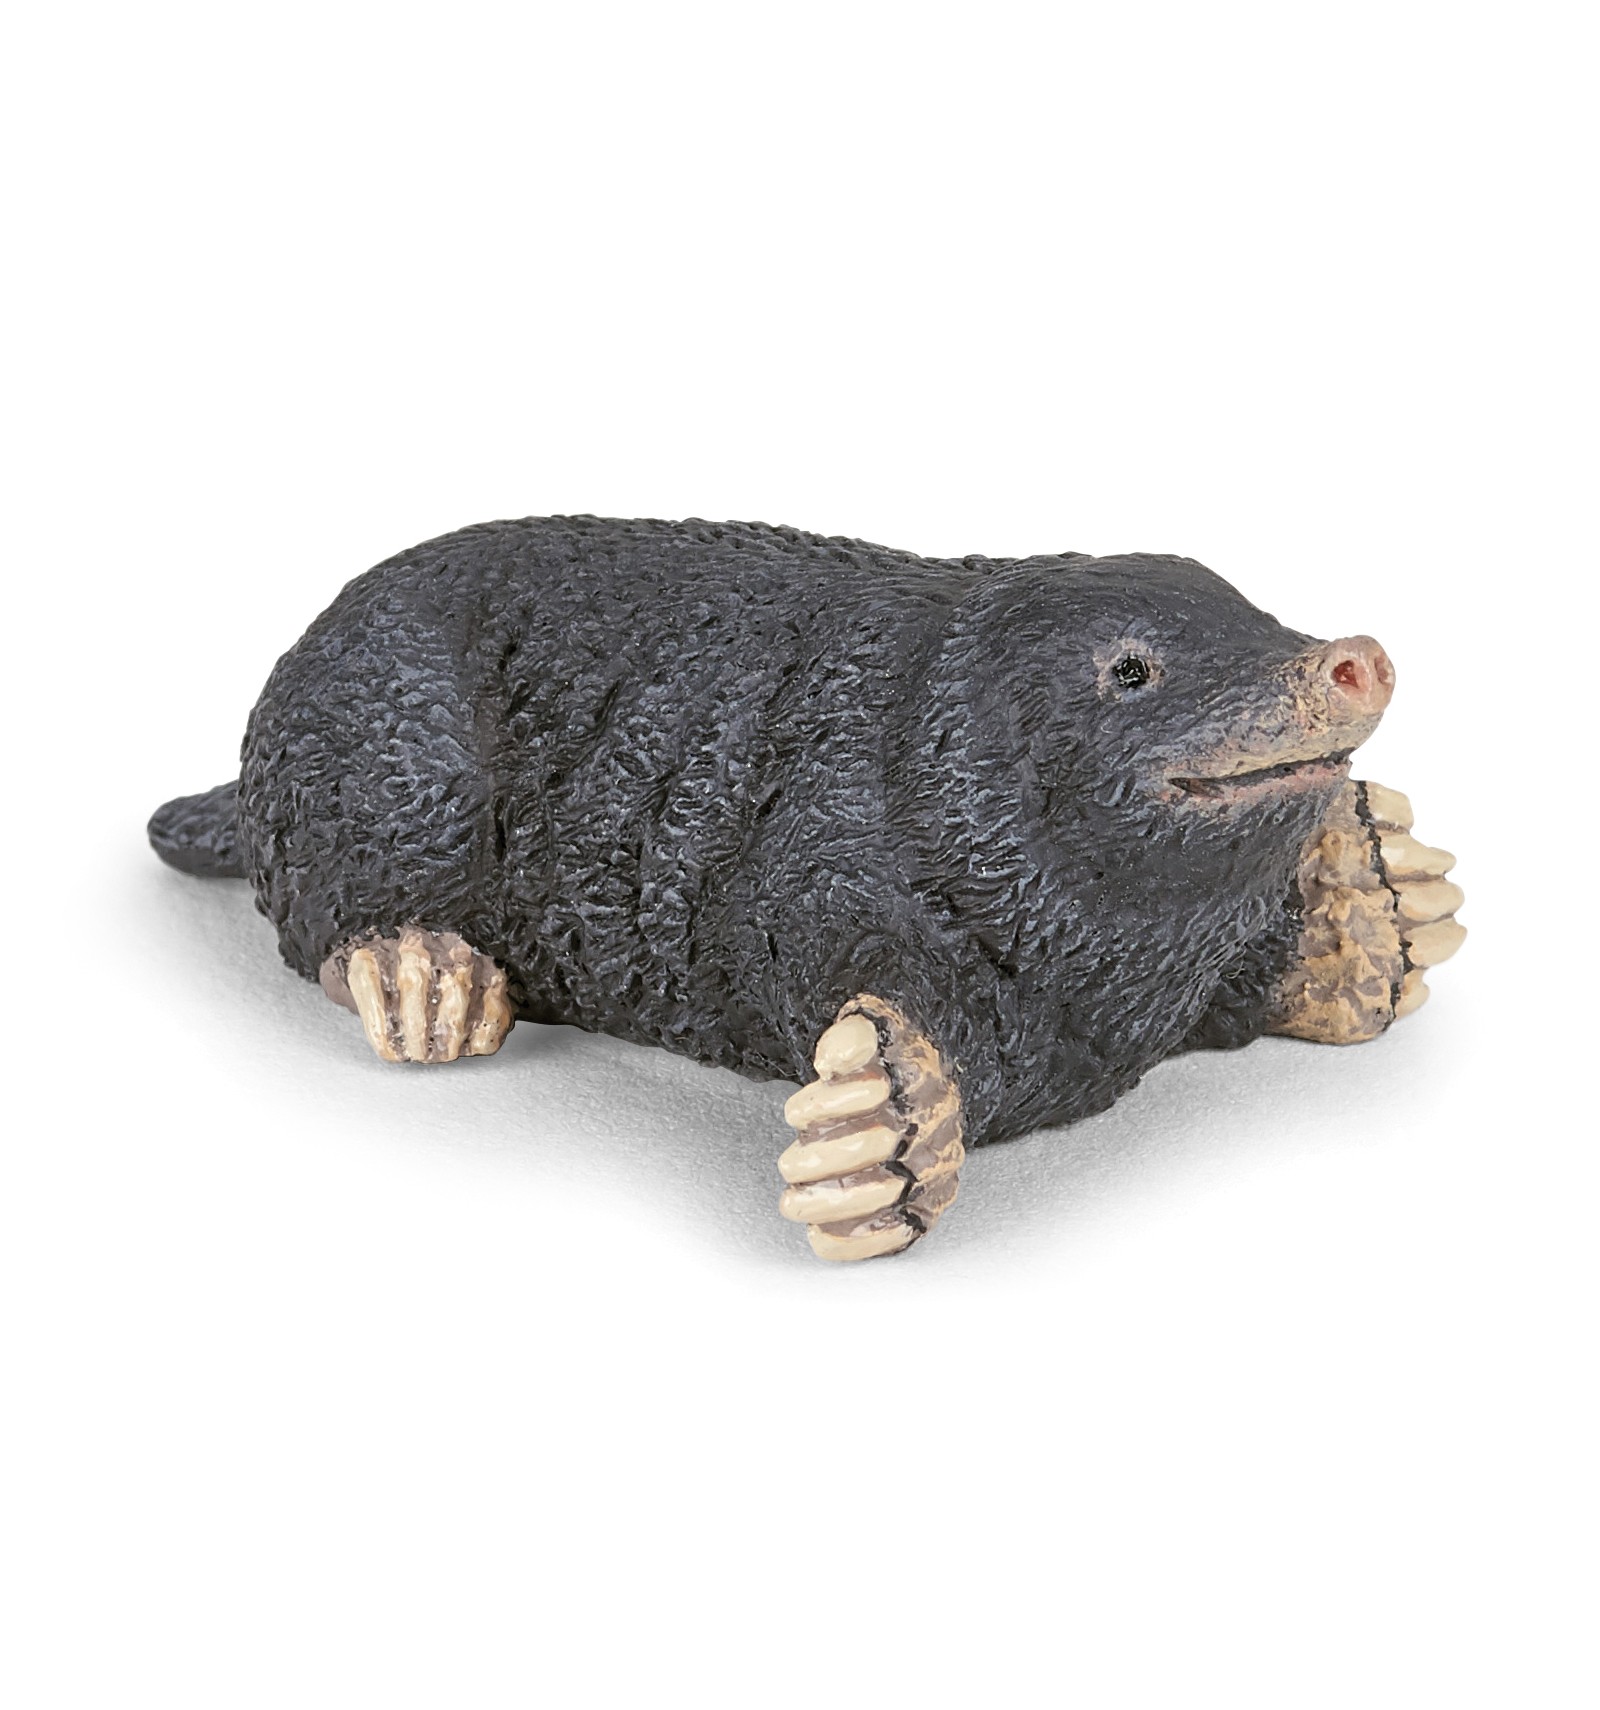 mole figurine